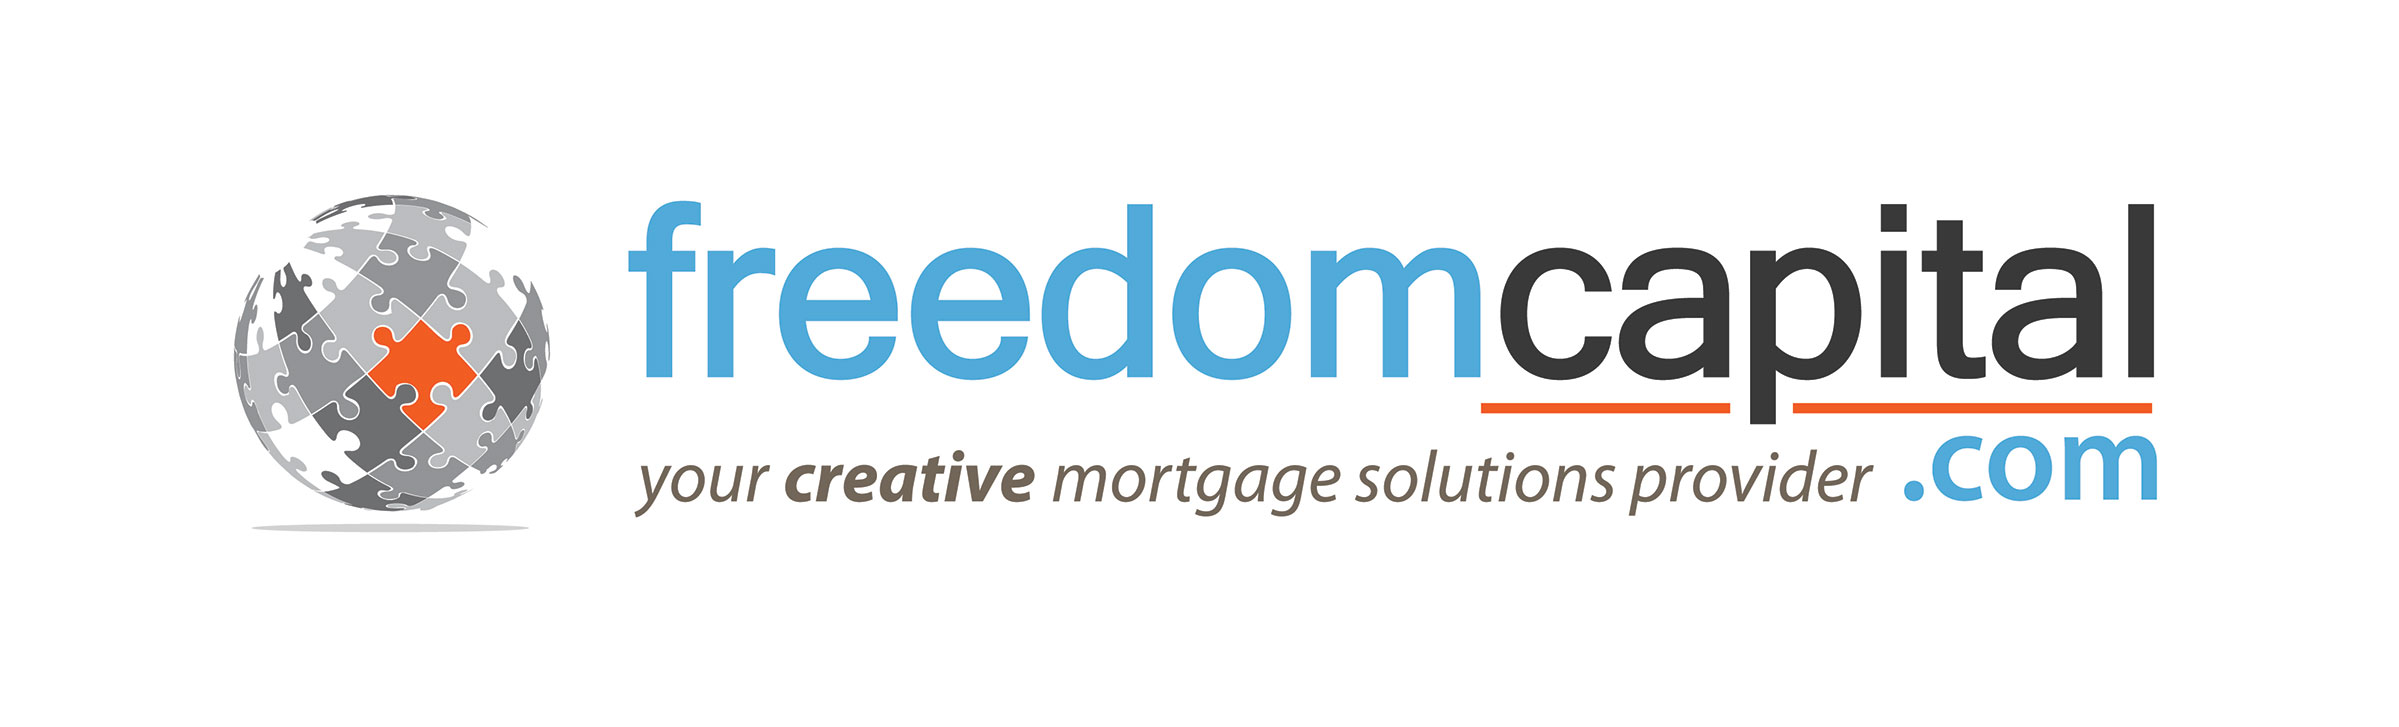 freedom-capital-logo